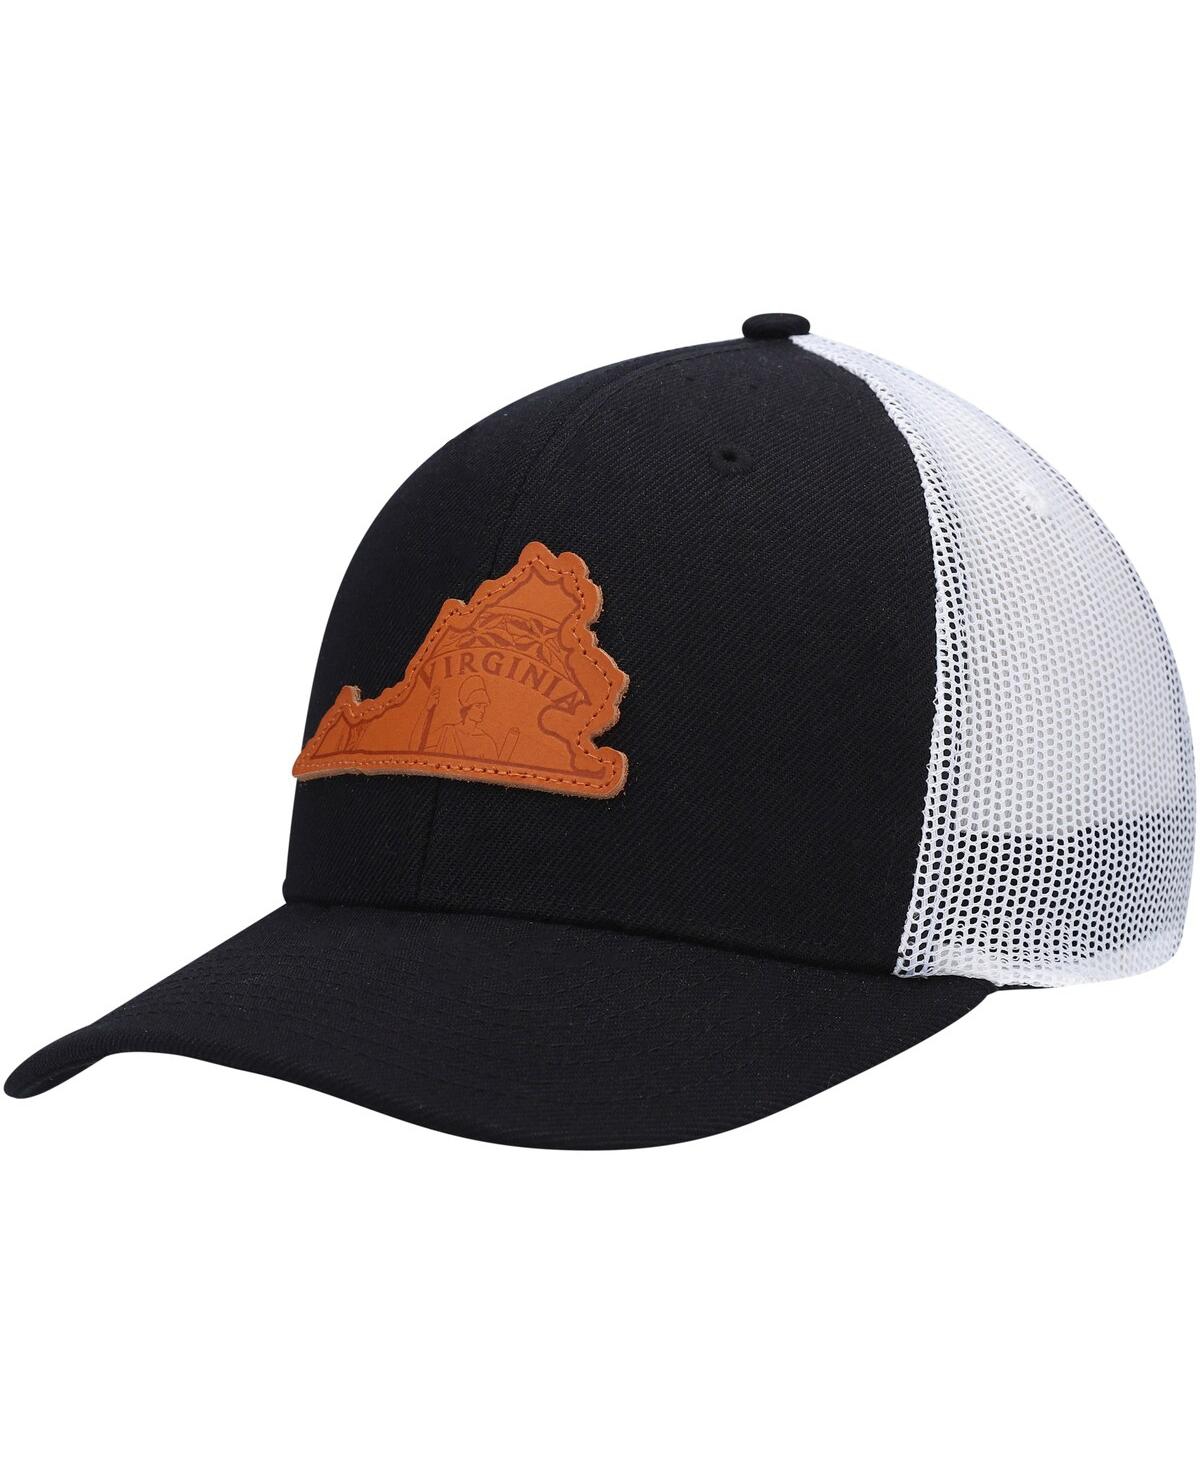 Local Crowns Men's  Black Virginia Leather State Applique Trucker Snapback Hat